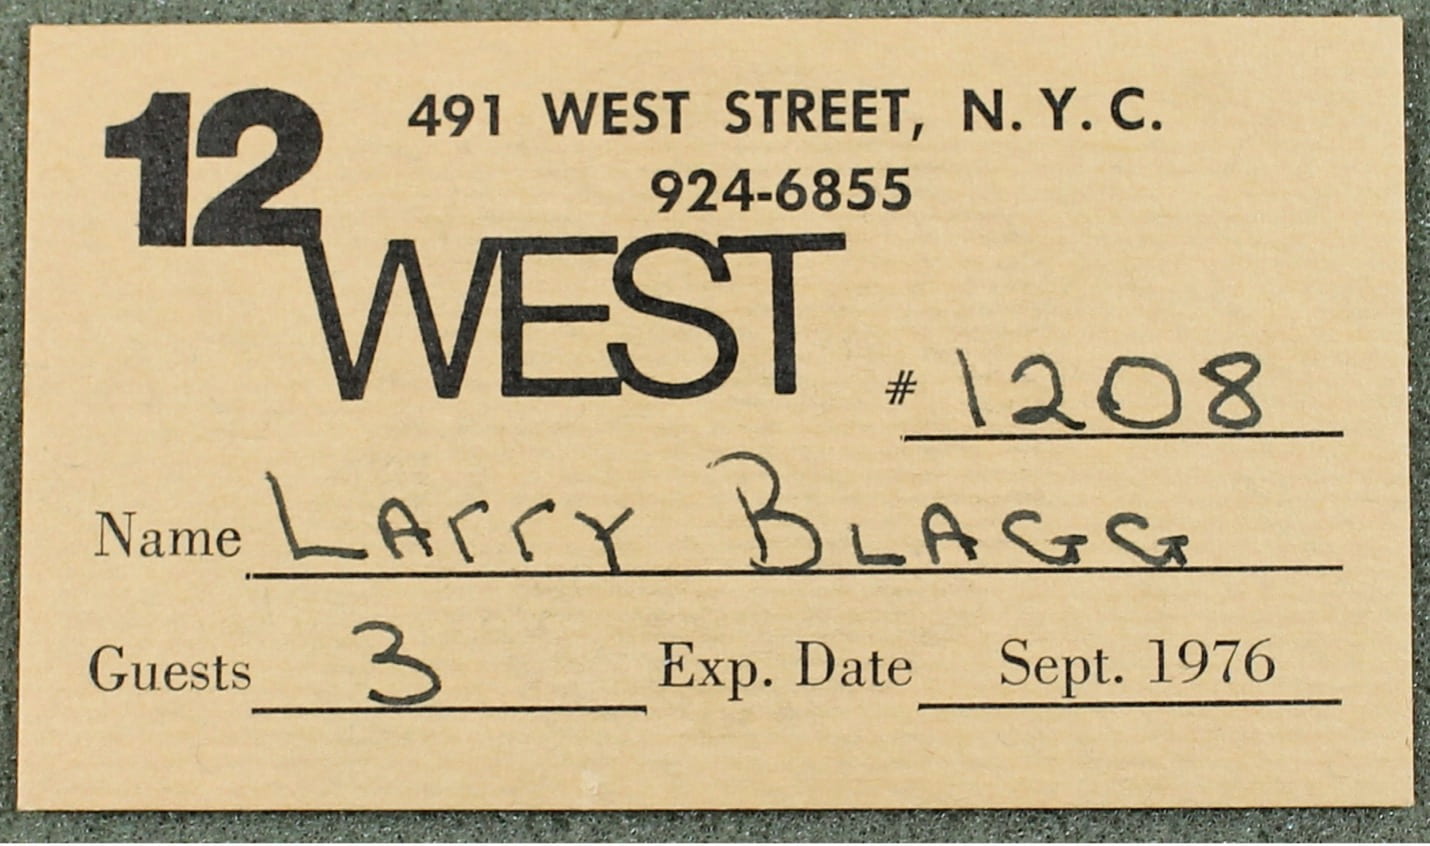 Larry Blagg 12 West Membership Card